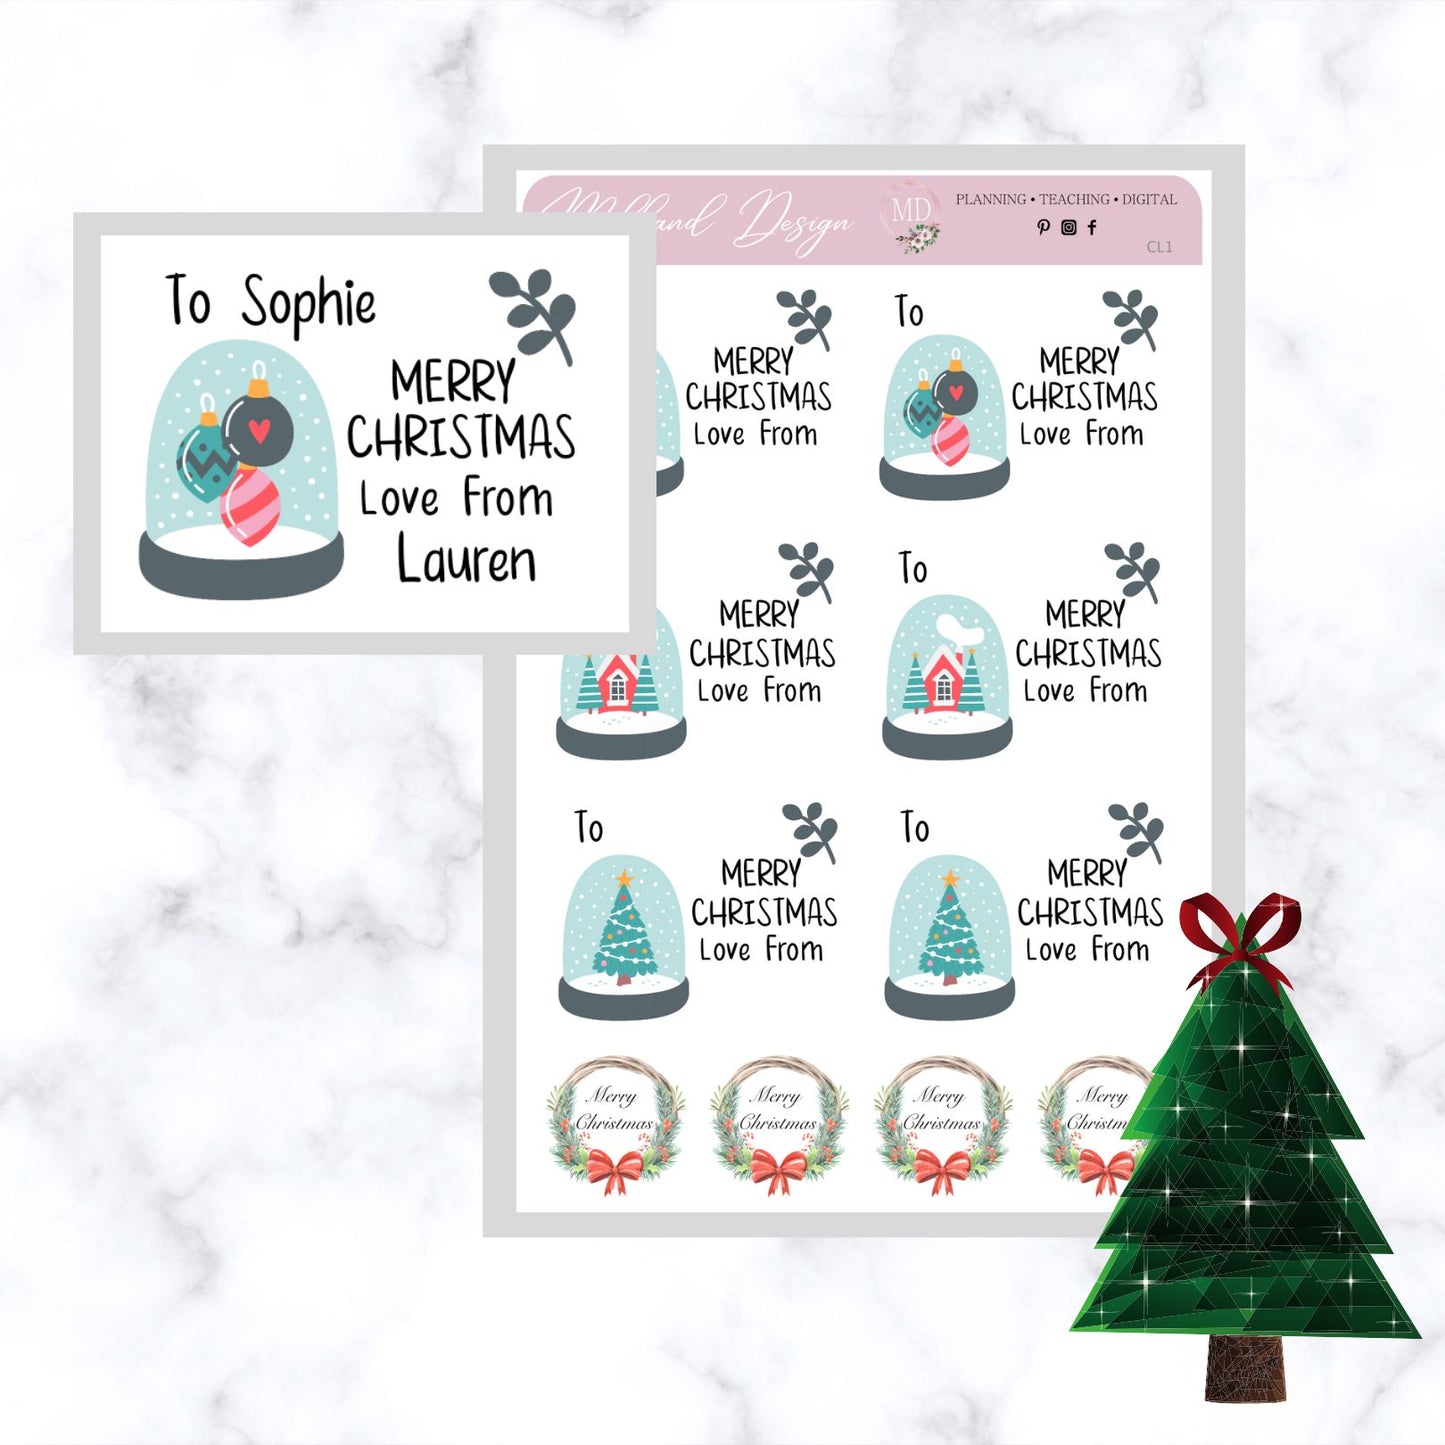 Snow Globe Blank & Personalised Christmas Present Labels